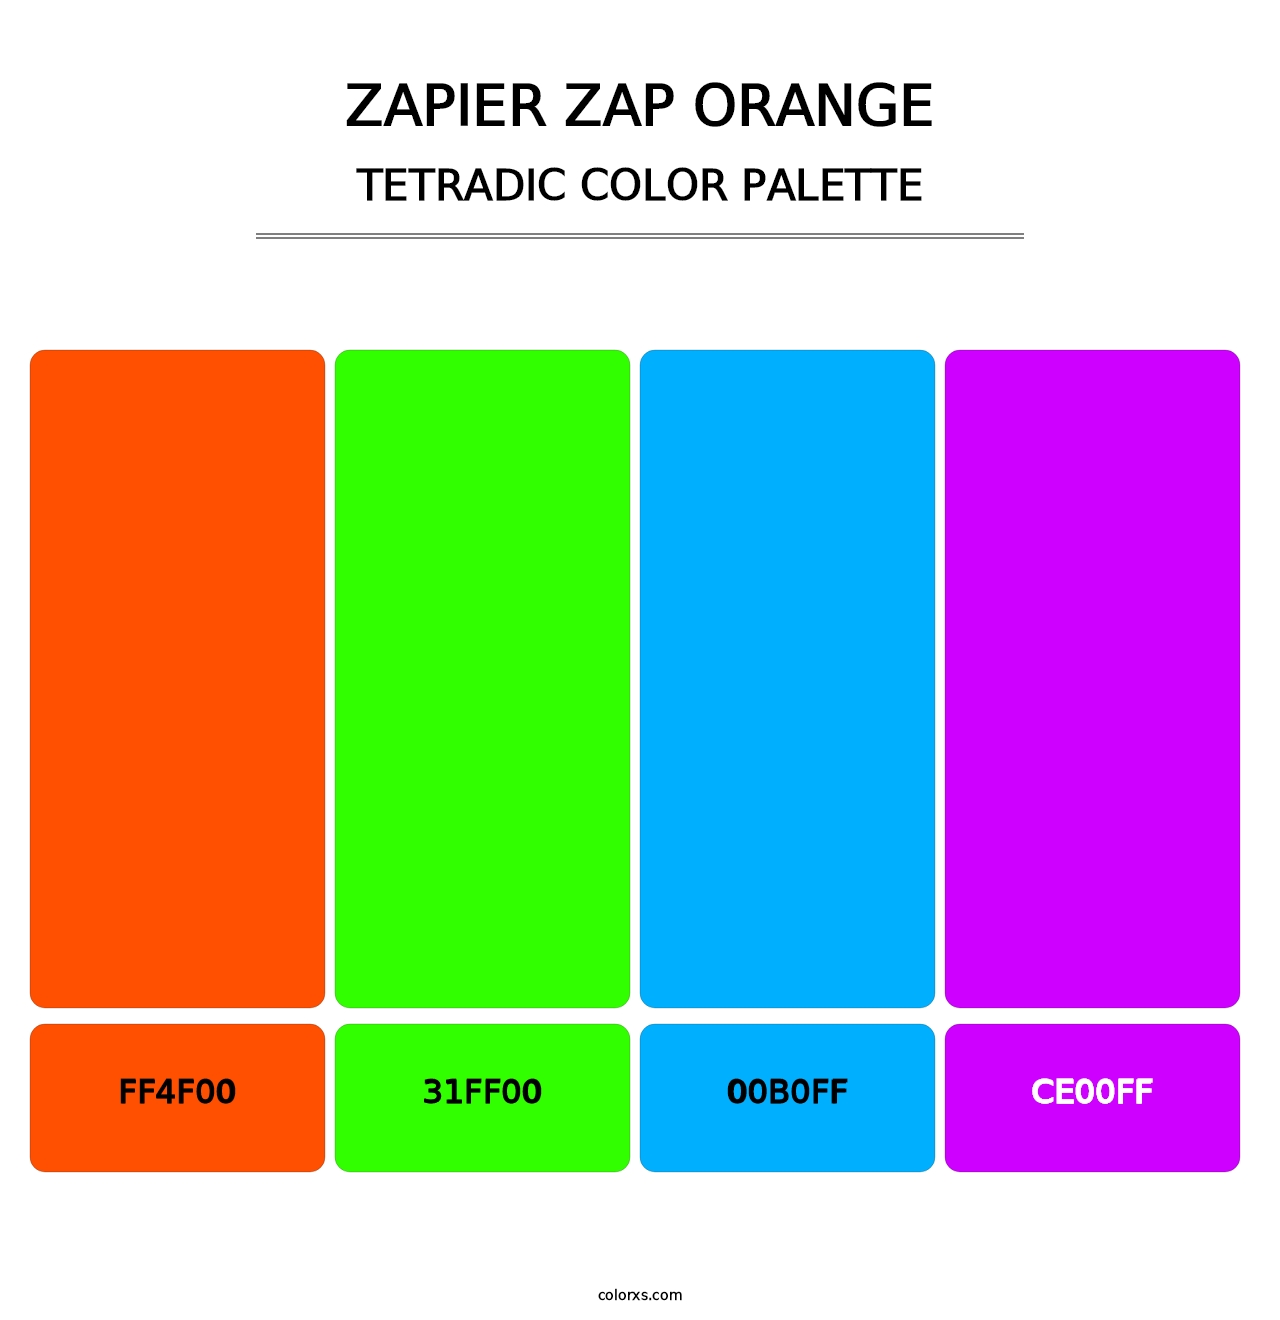 Zapier Zap Orange - Tetradic Color Palette